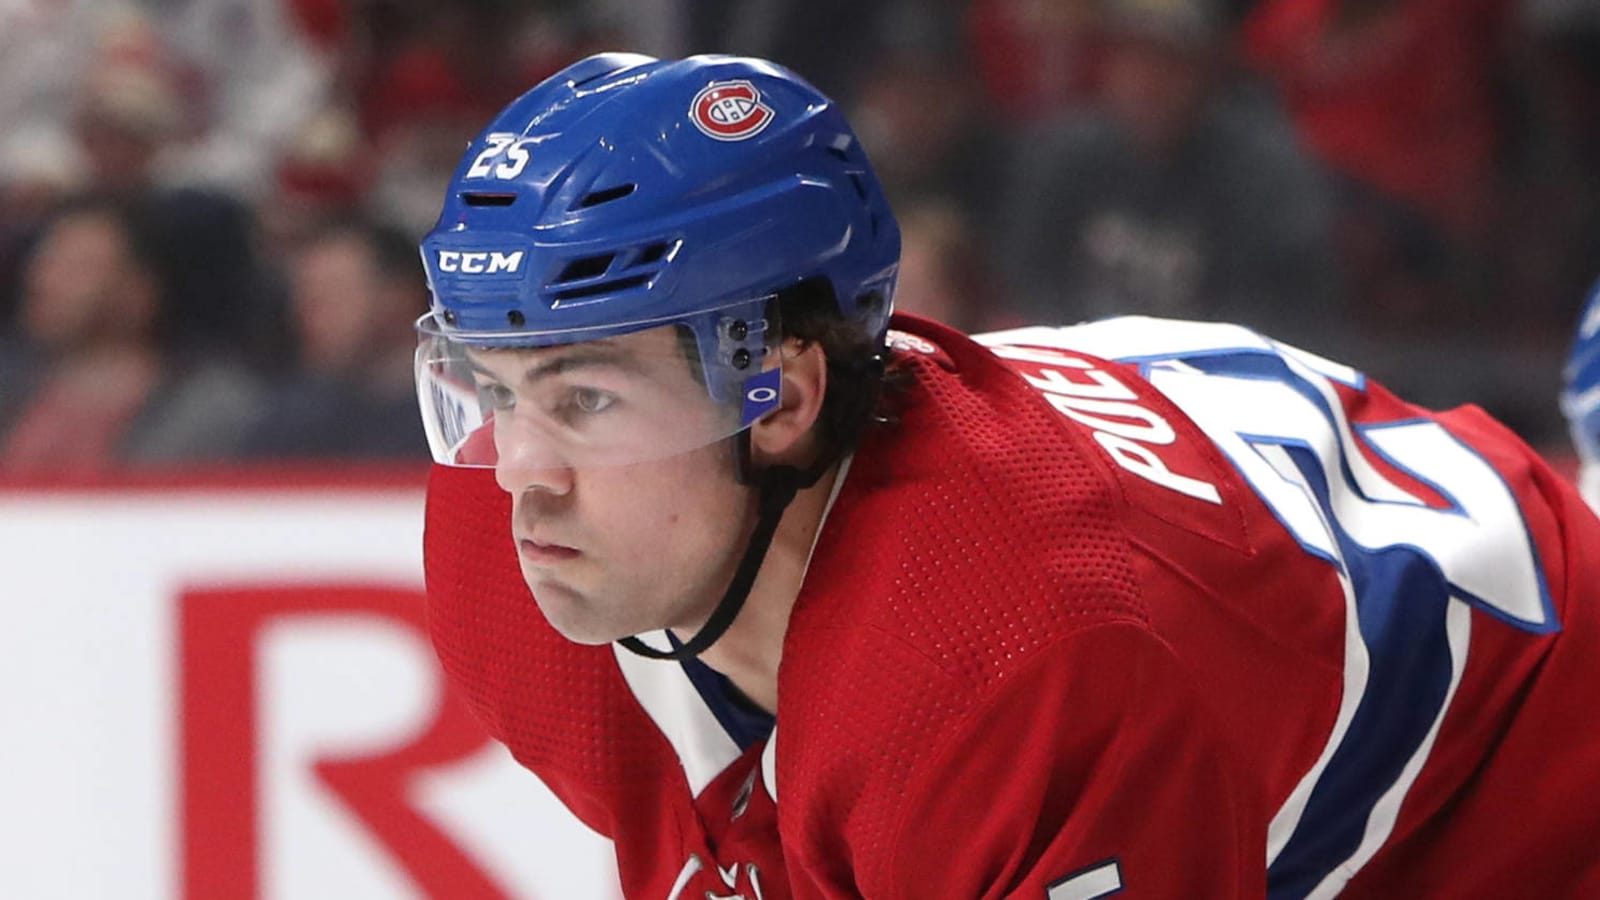 Canadiens' Poehling to undergo season-ending surgery